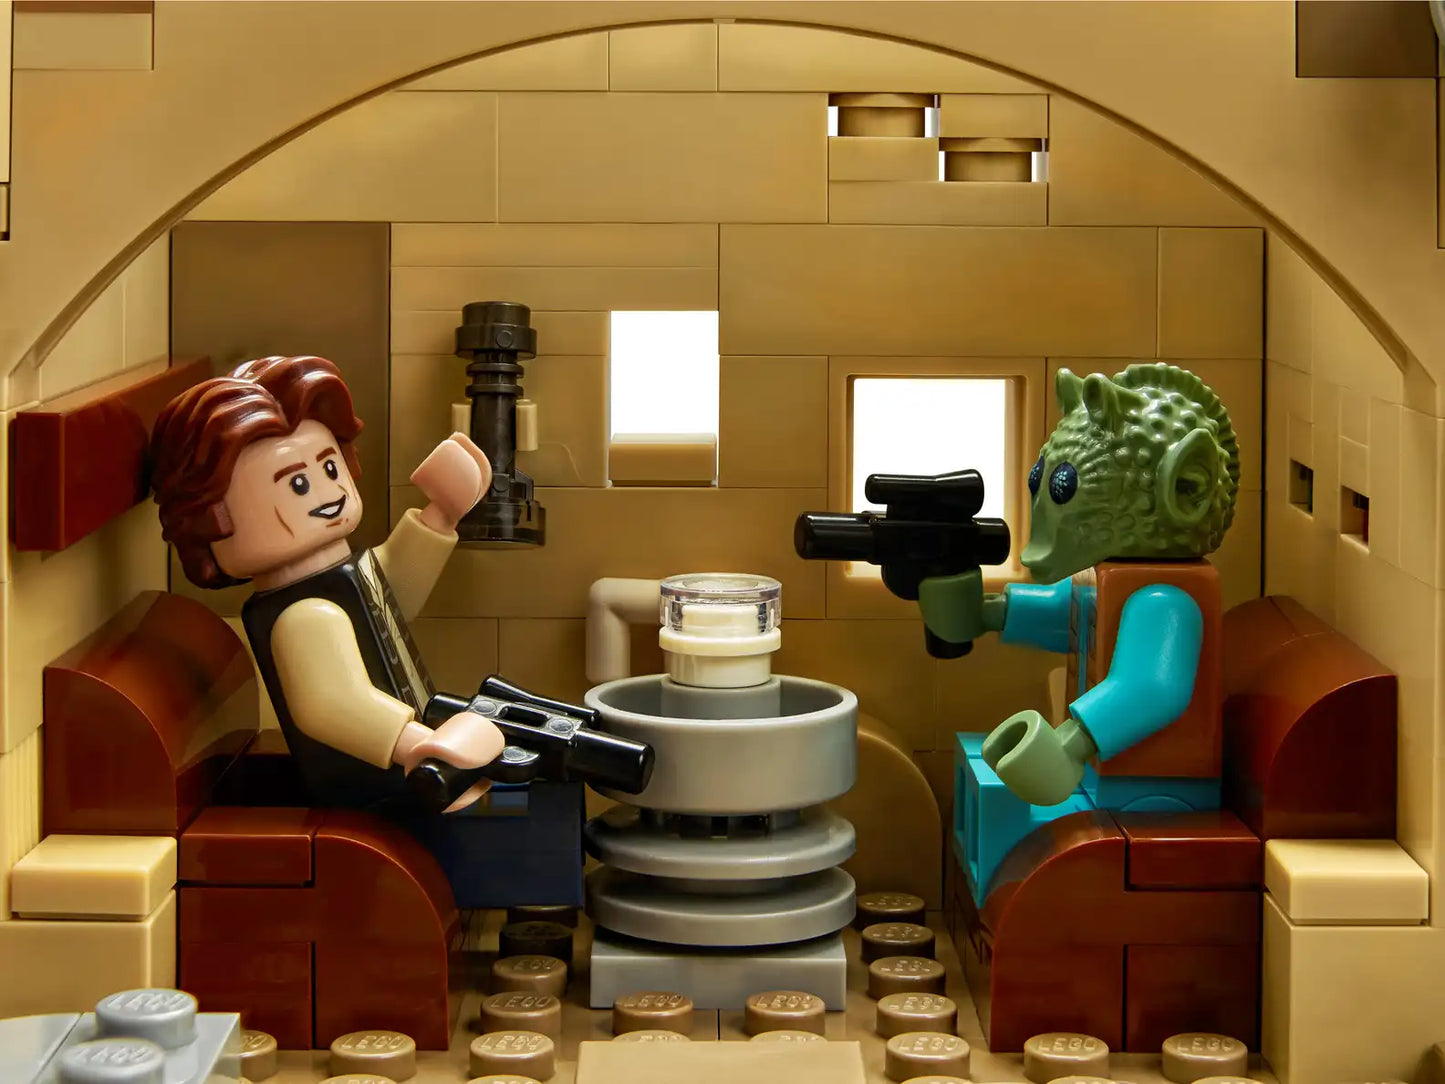 Lego - Star Wars Mos Eisley Cantina 75290